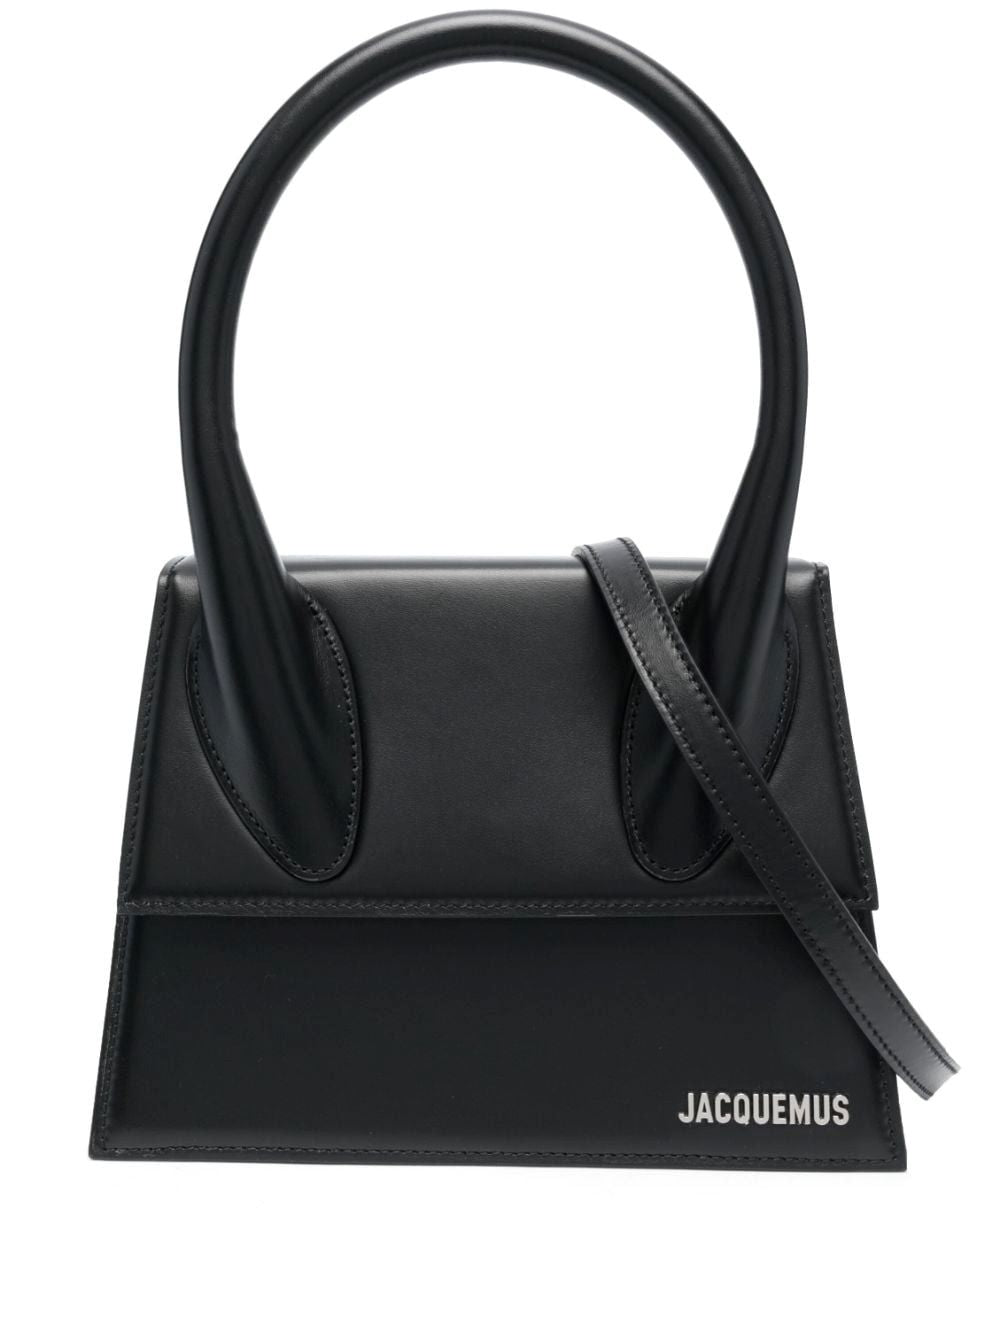 Jacquemus Le Grand Chiquito Shoulder Bag